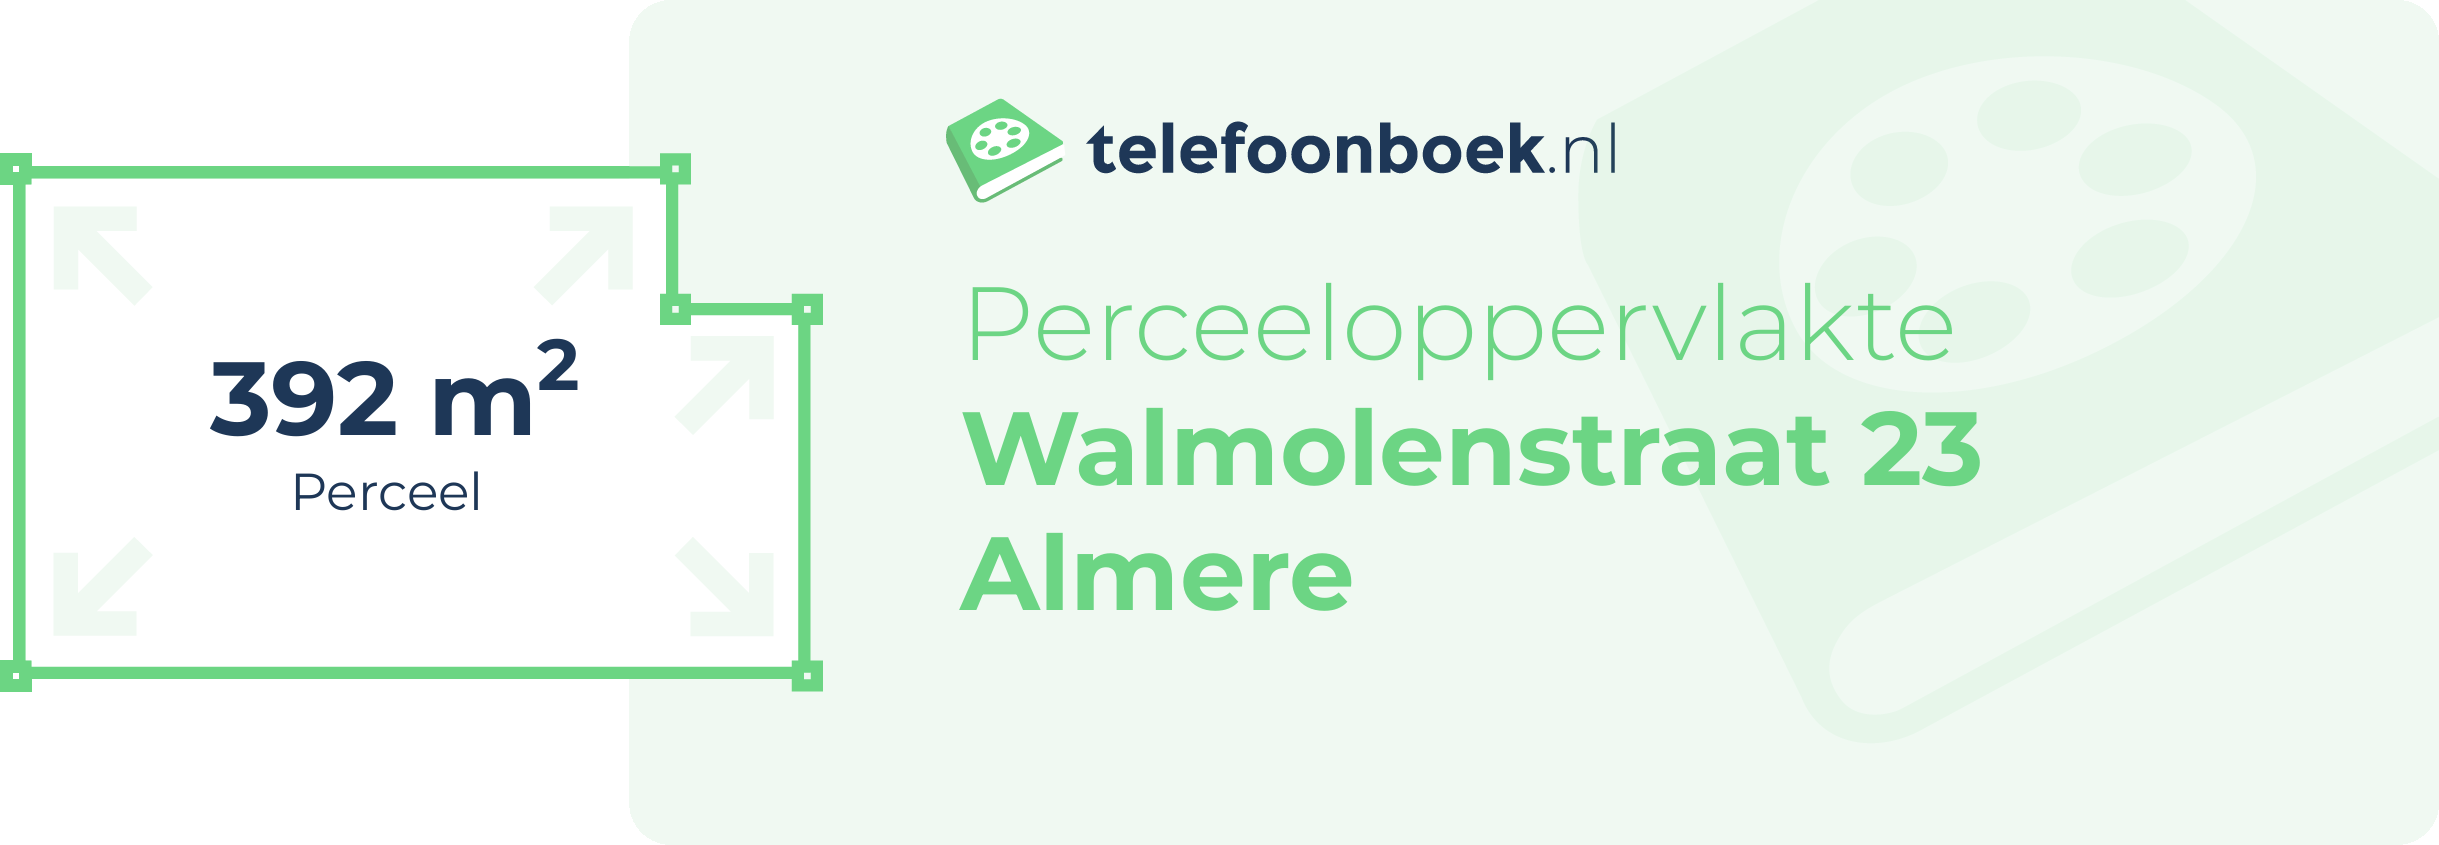 Perceeloppervlakte Walmolenstraat 23 Almere